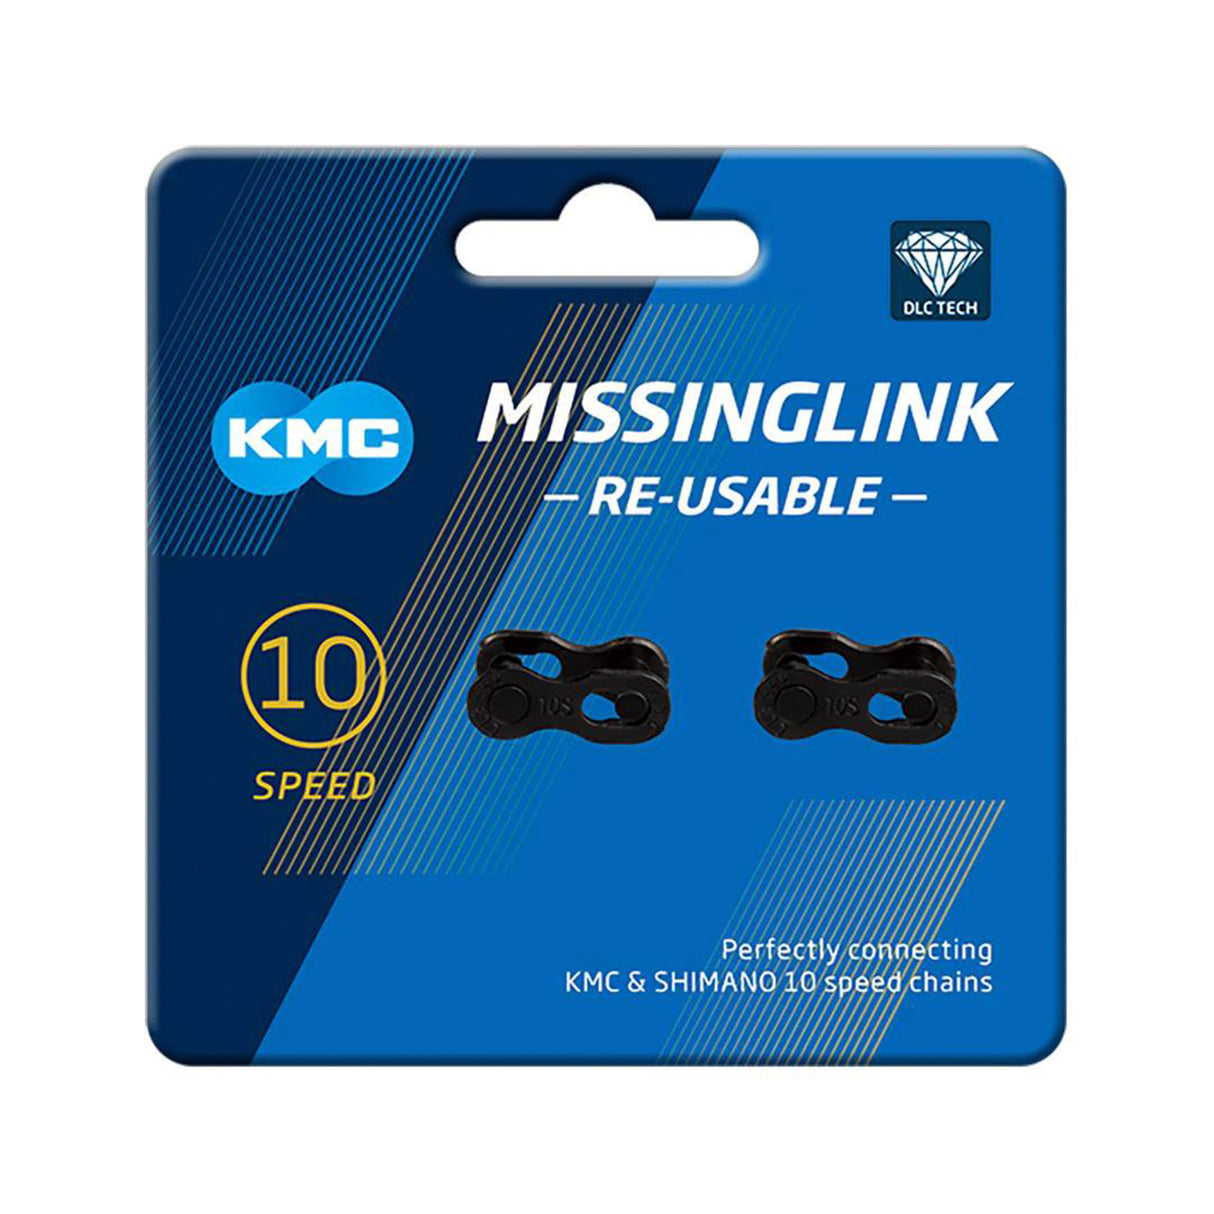 KMC CL559R DLC Missing Link 10 Speed Black 2 Pairs